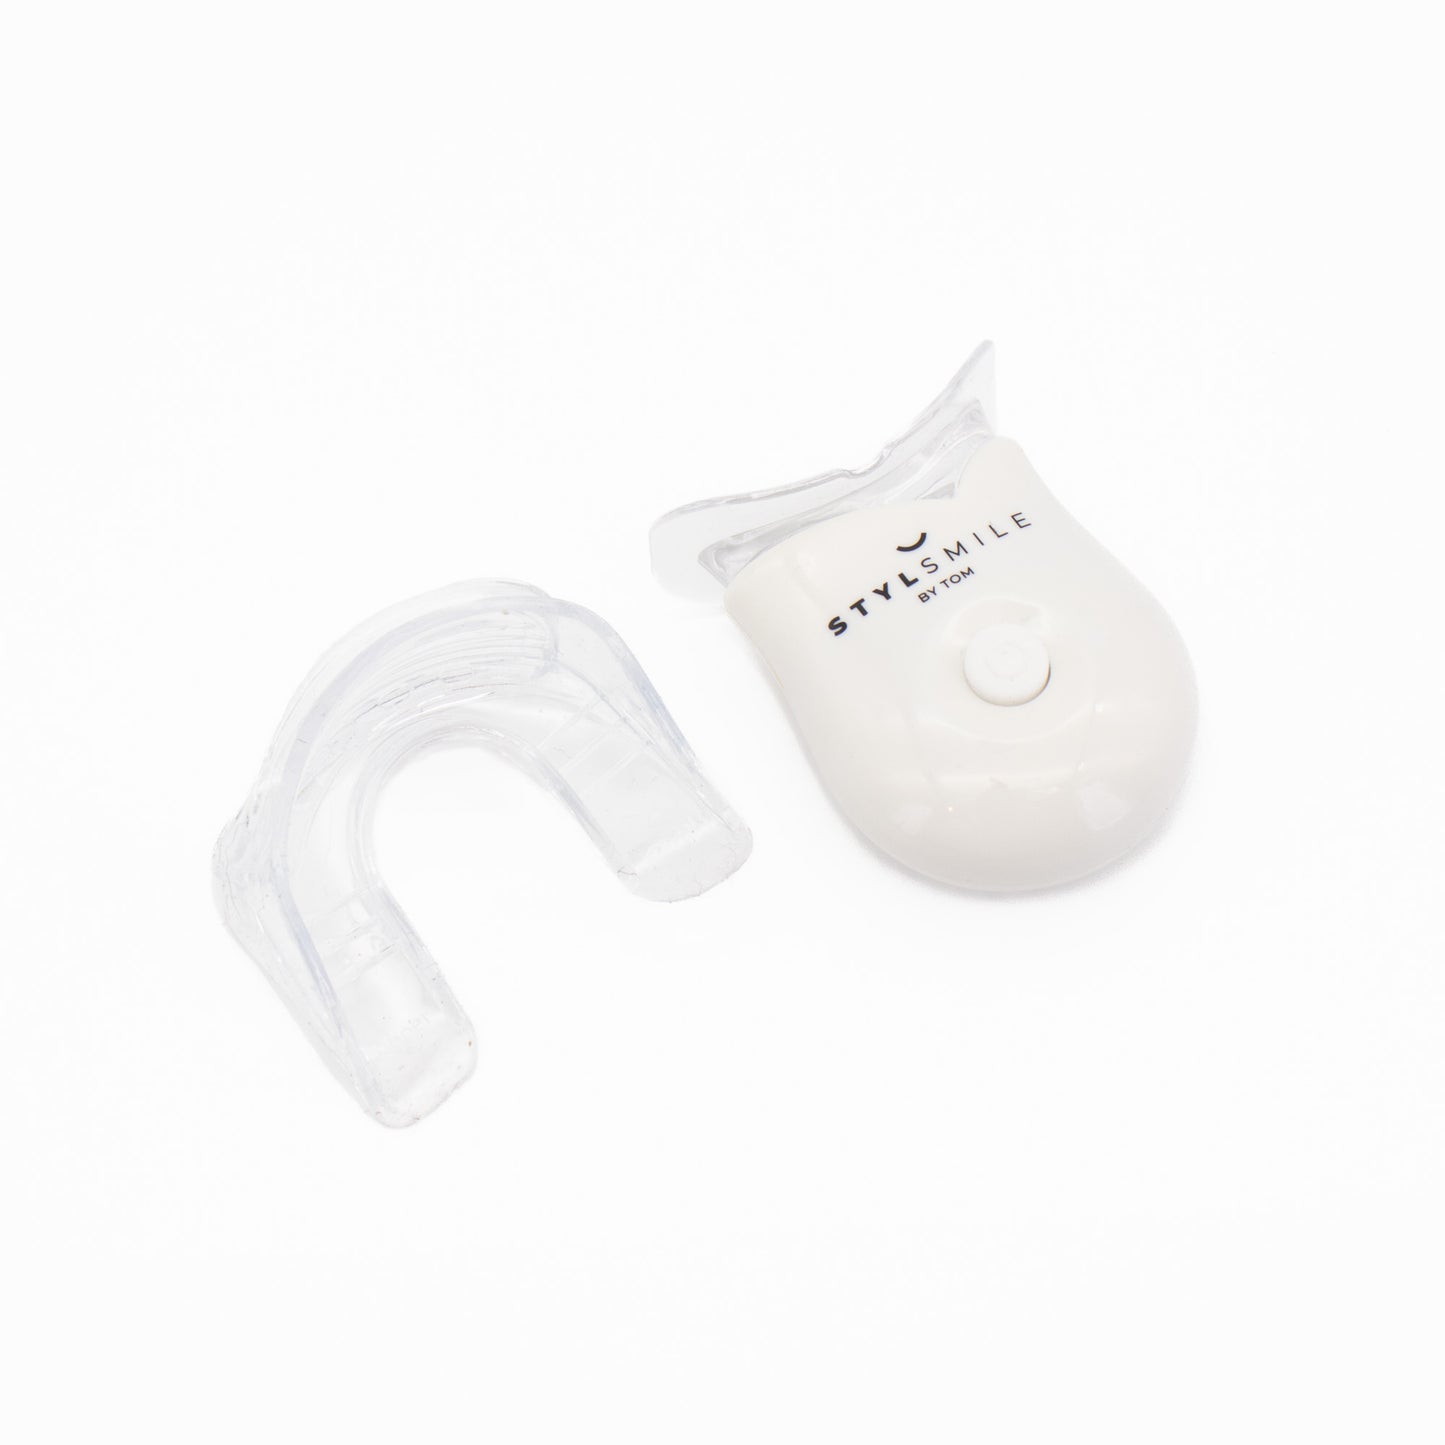 StylSmile Lighten Up Whitening Kit No Toothpaste - Ex Display Imperfect Box